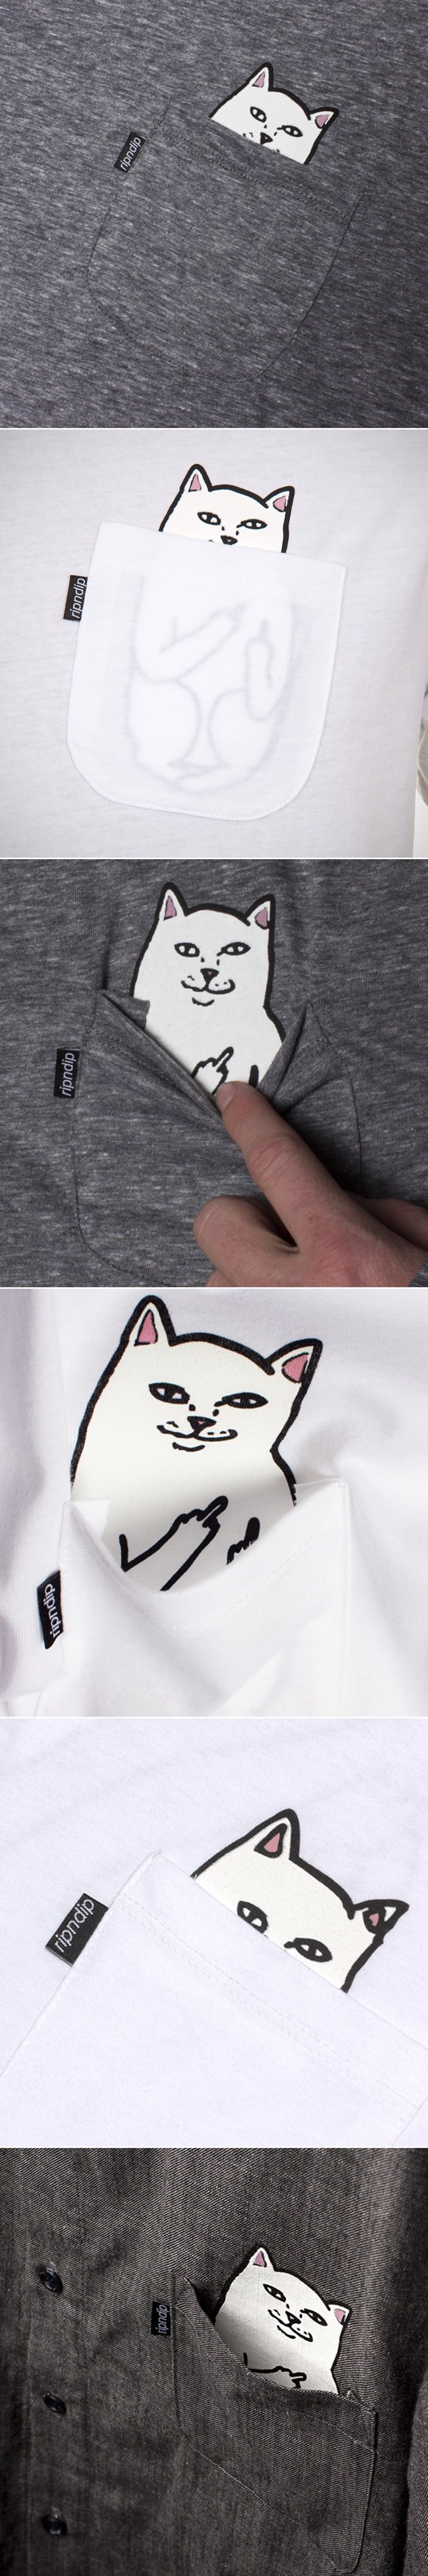 Drska majica za mačkofile skriva fantastično iznenađenje!